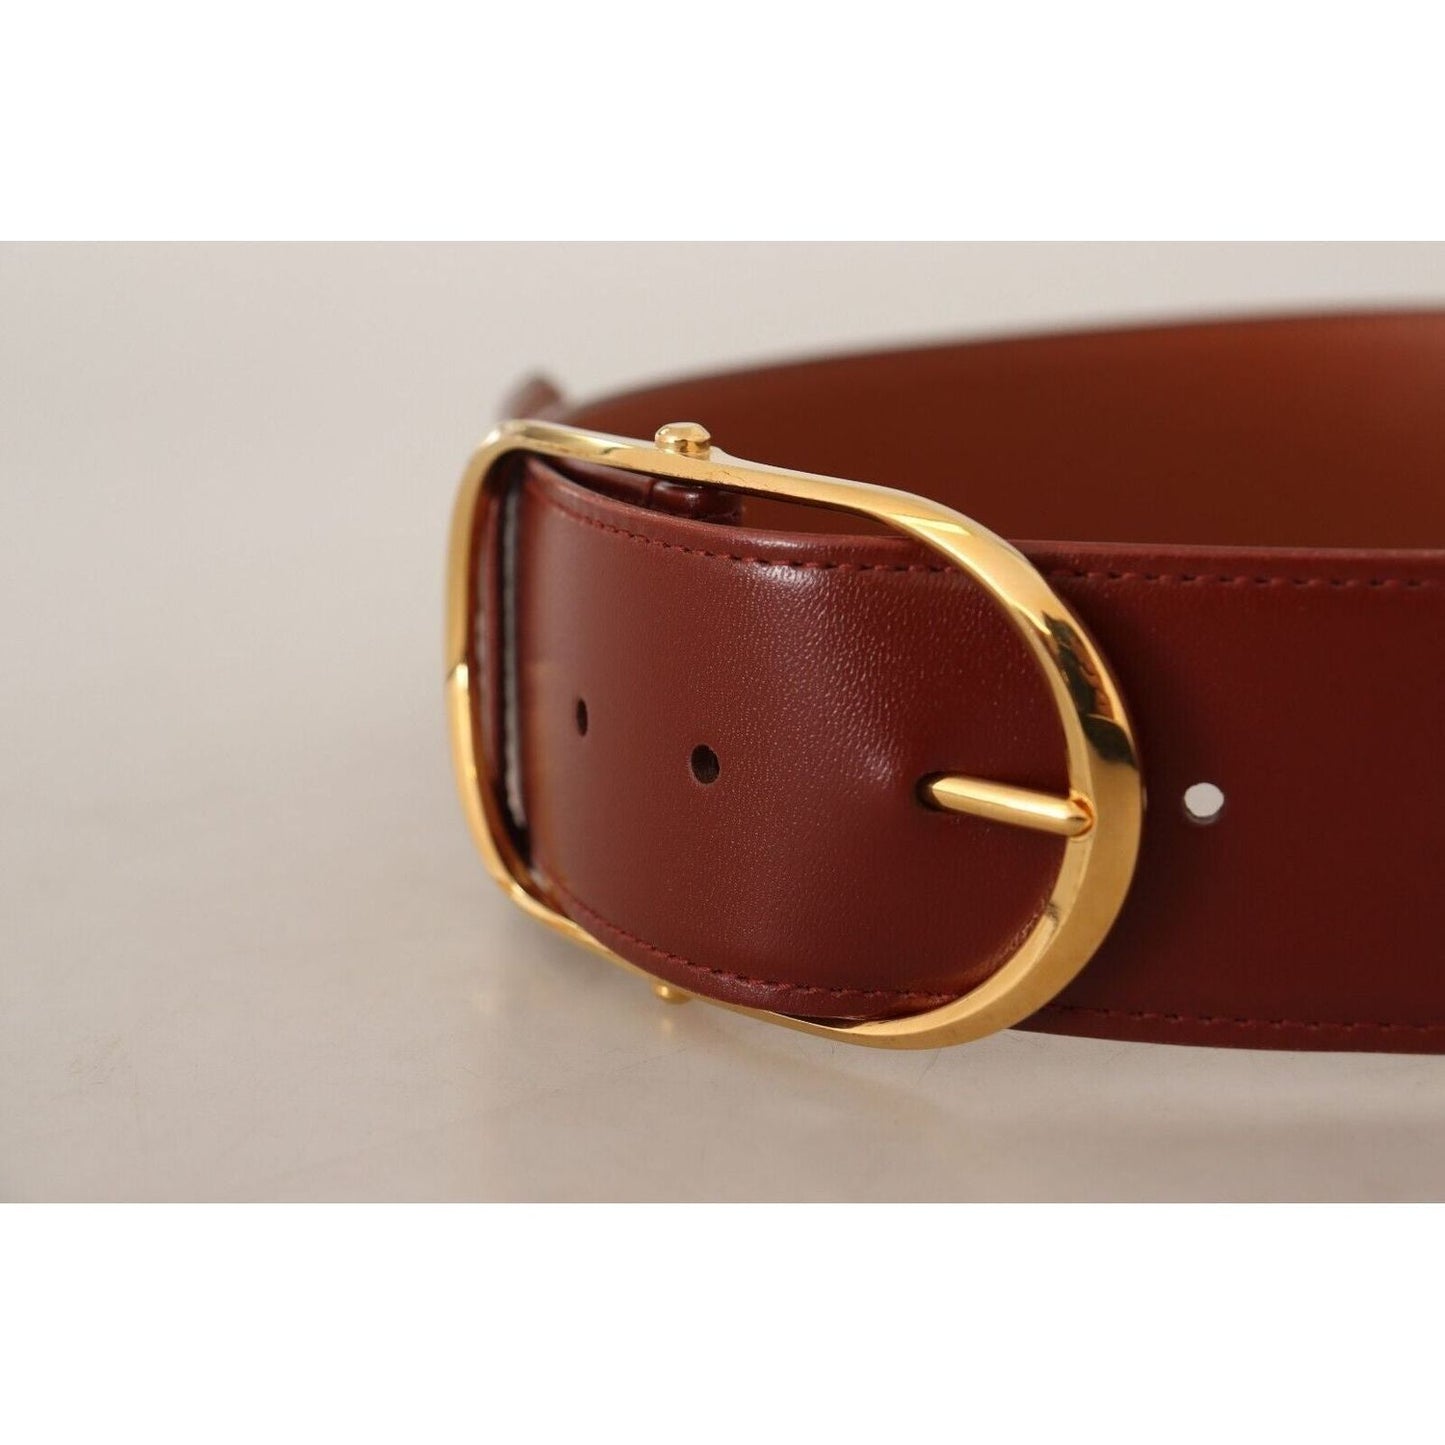 Dolce & Gabbana Elegant Gold Buckle Leather Belt brown-leather-gold-metal-oval-buckle-belt-8 s-l1600-1-294-a712a602-064.jpg